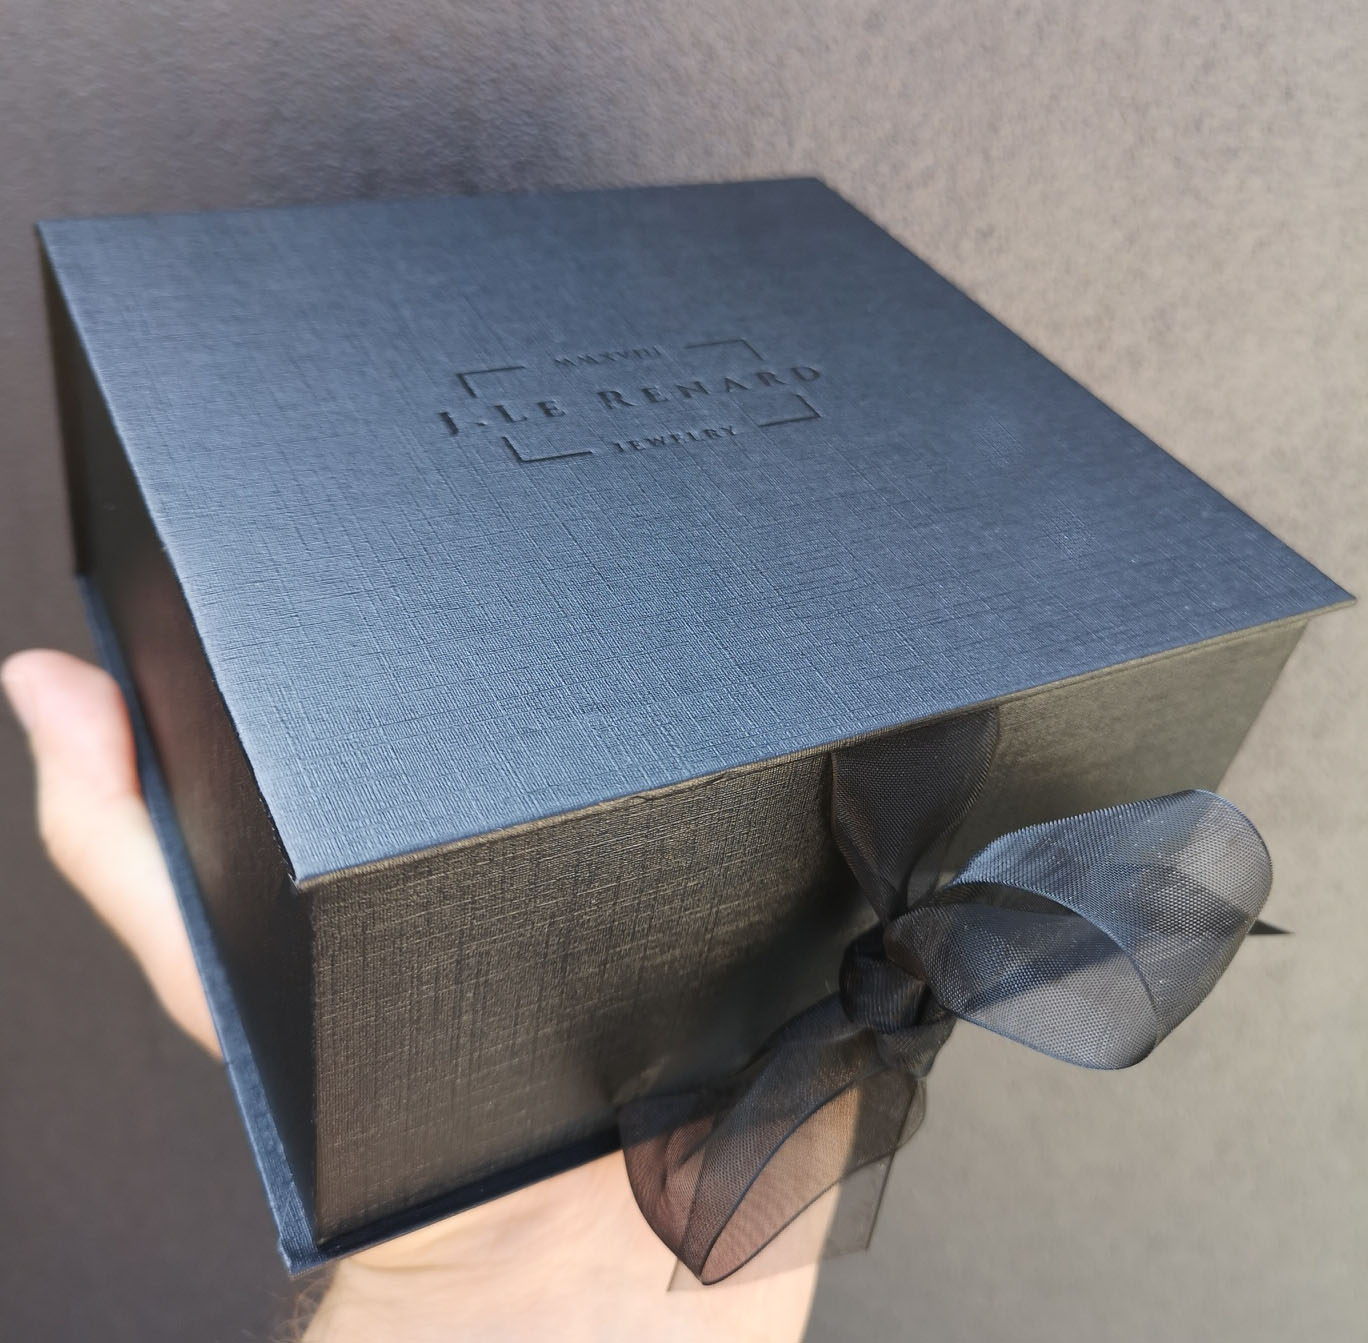 Retail High Quality Rigid Cardboard Paper Jewelry Packaging Black